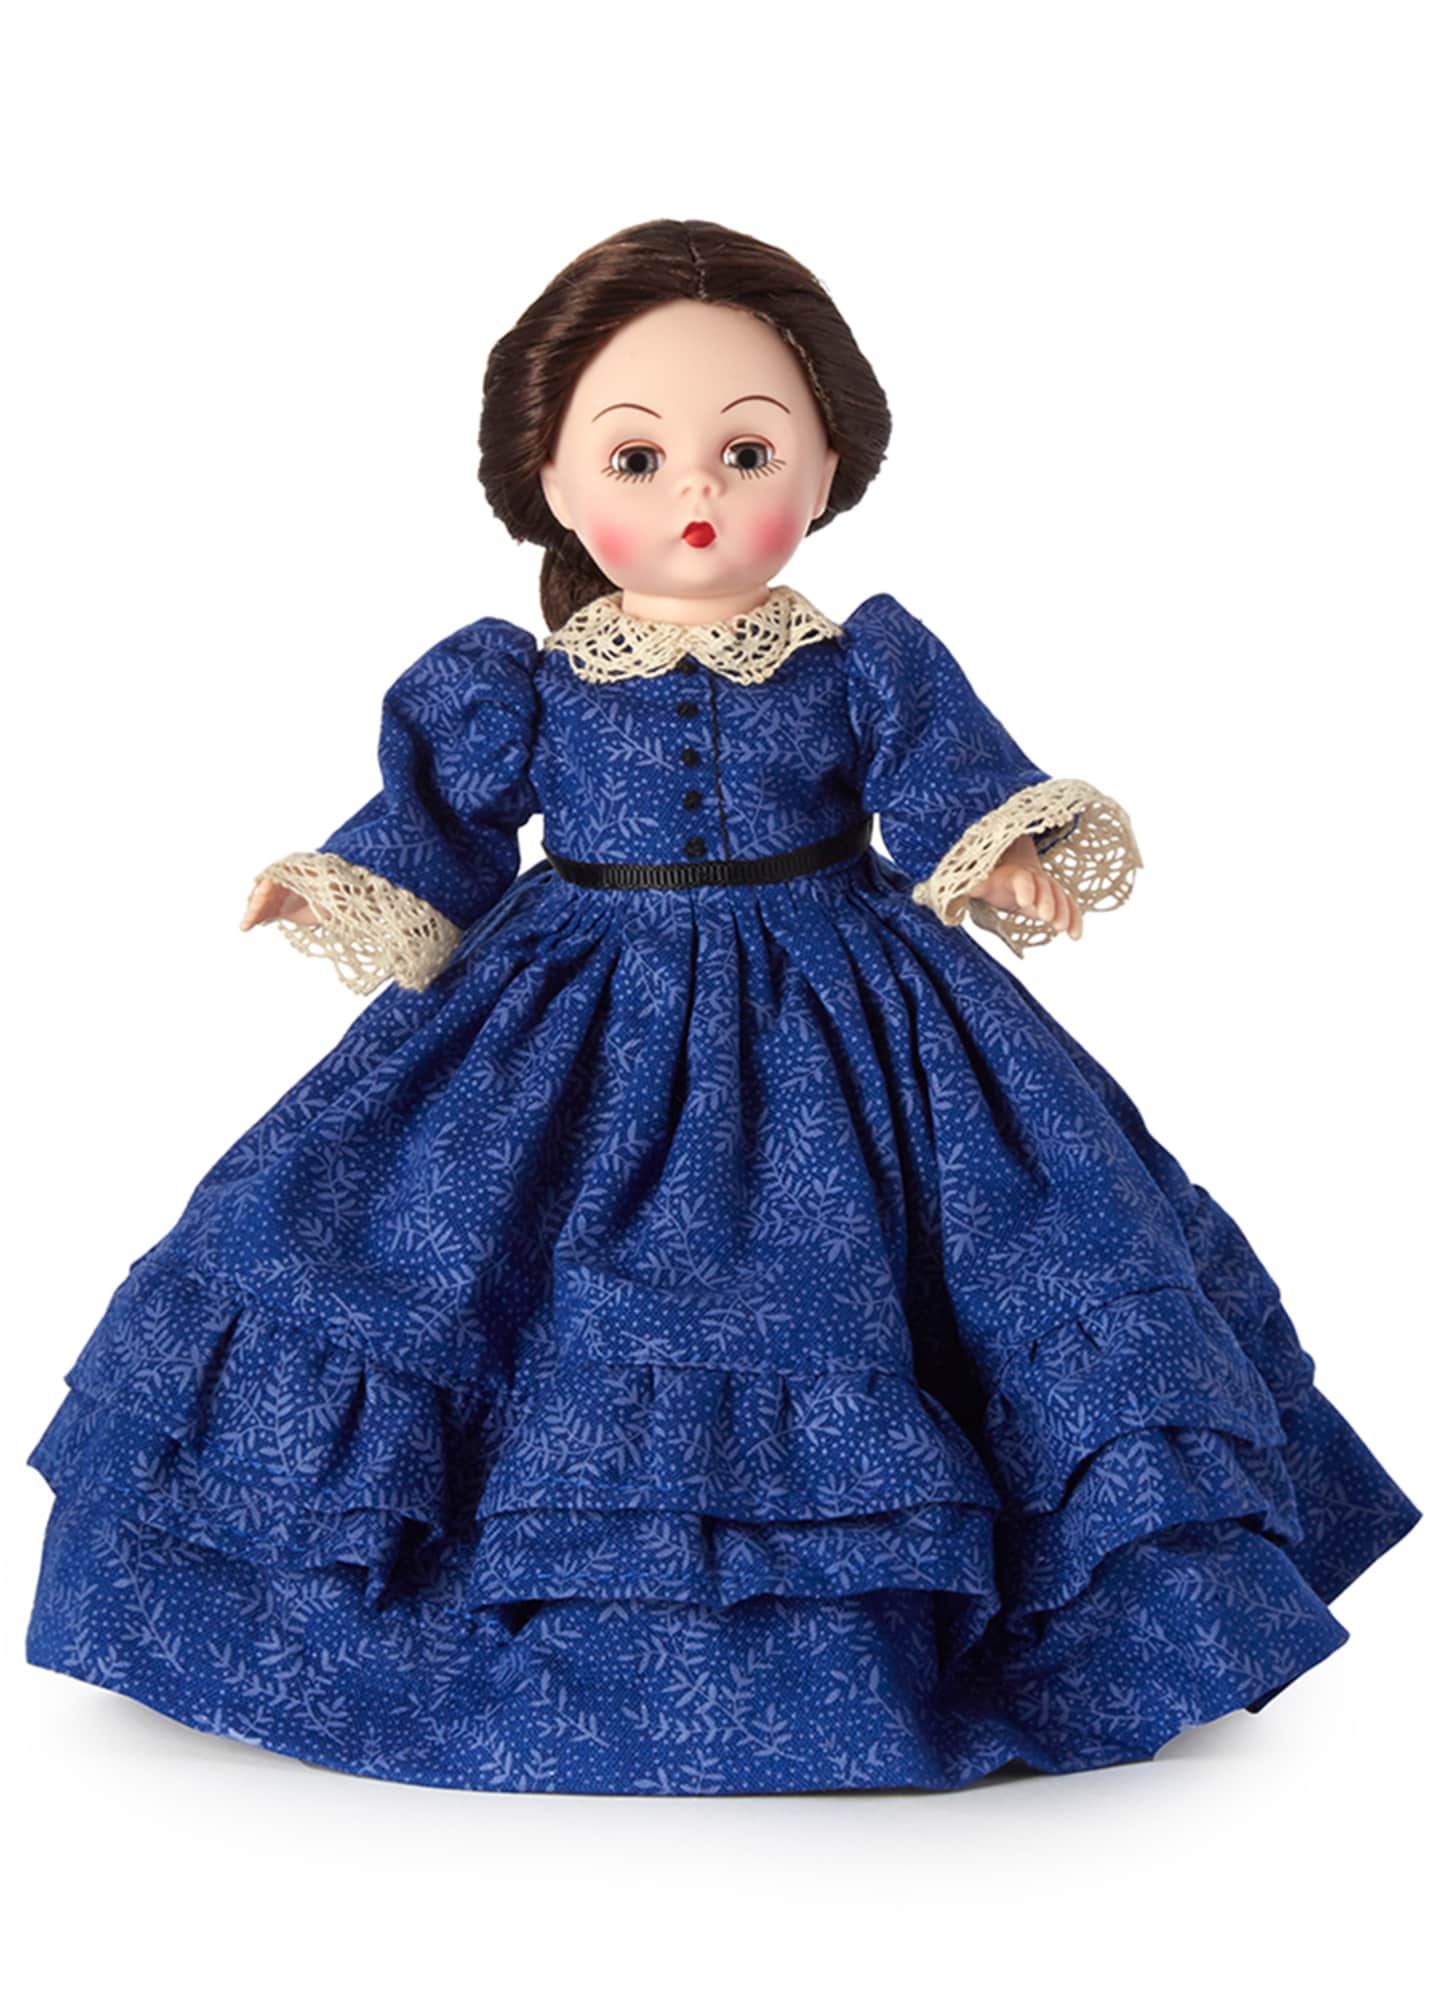 madame alexander little women dolls